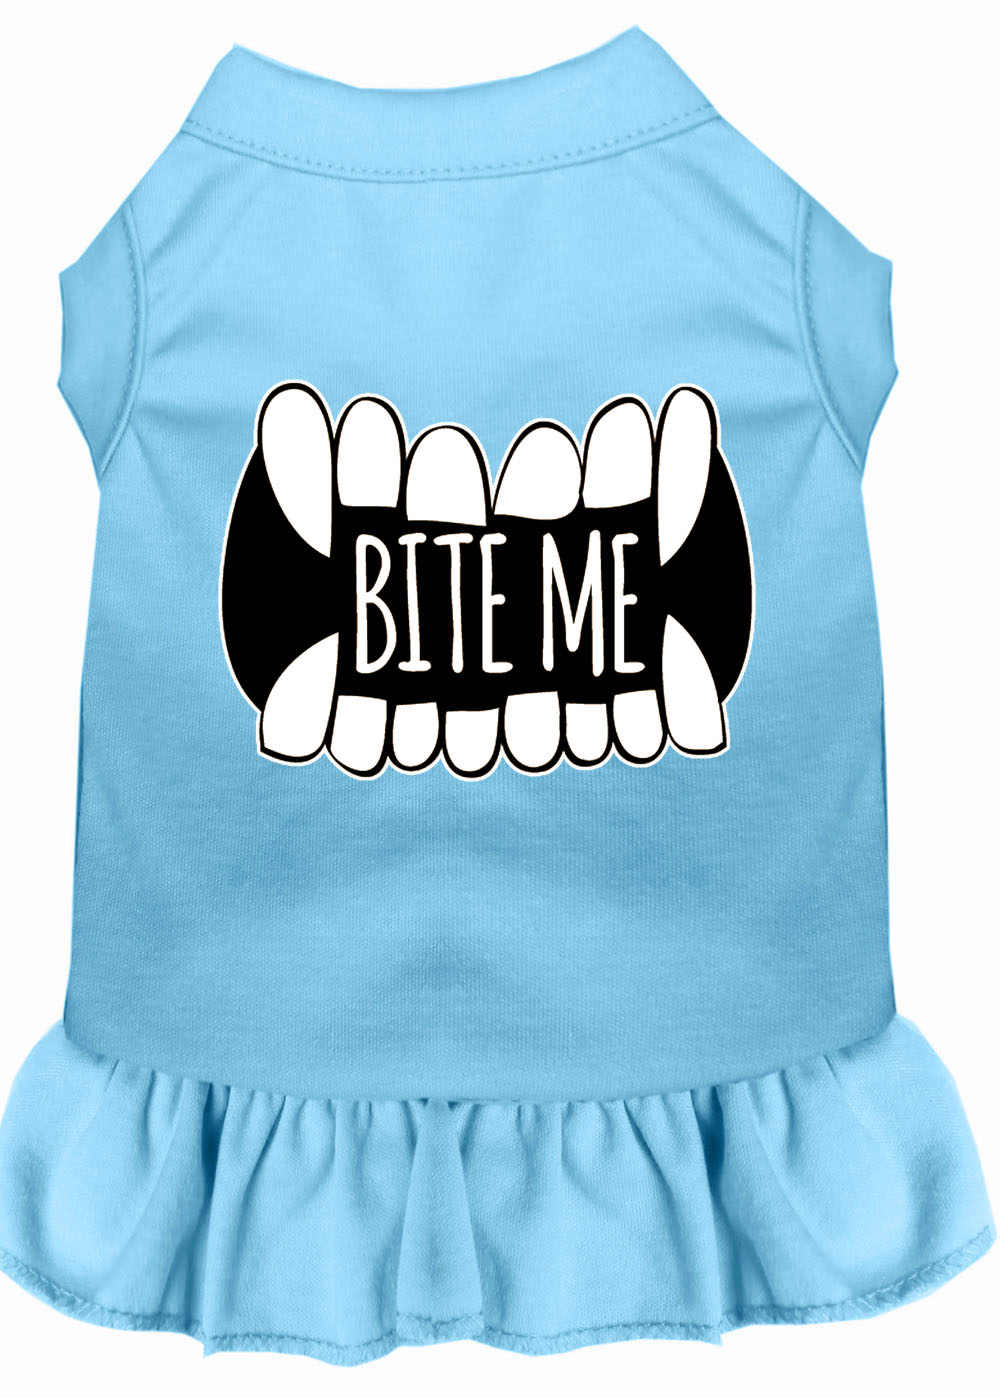 Bite Me Screen Print Dog Dress Baby Blue Med